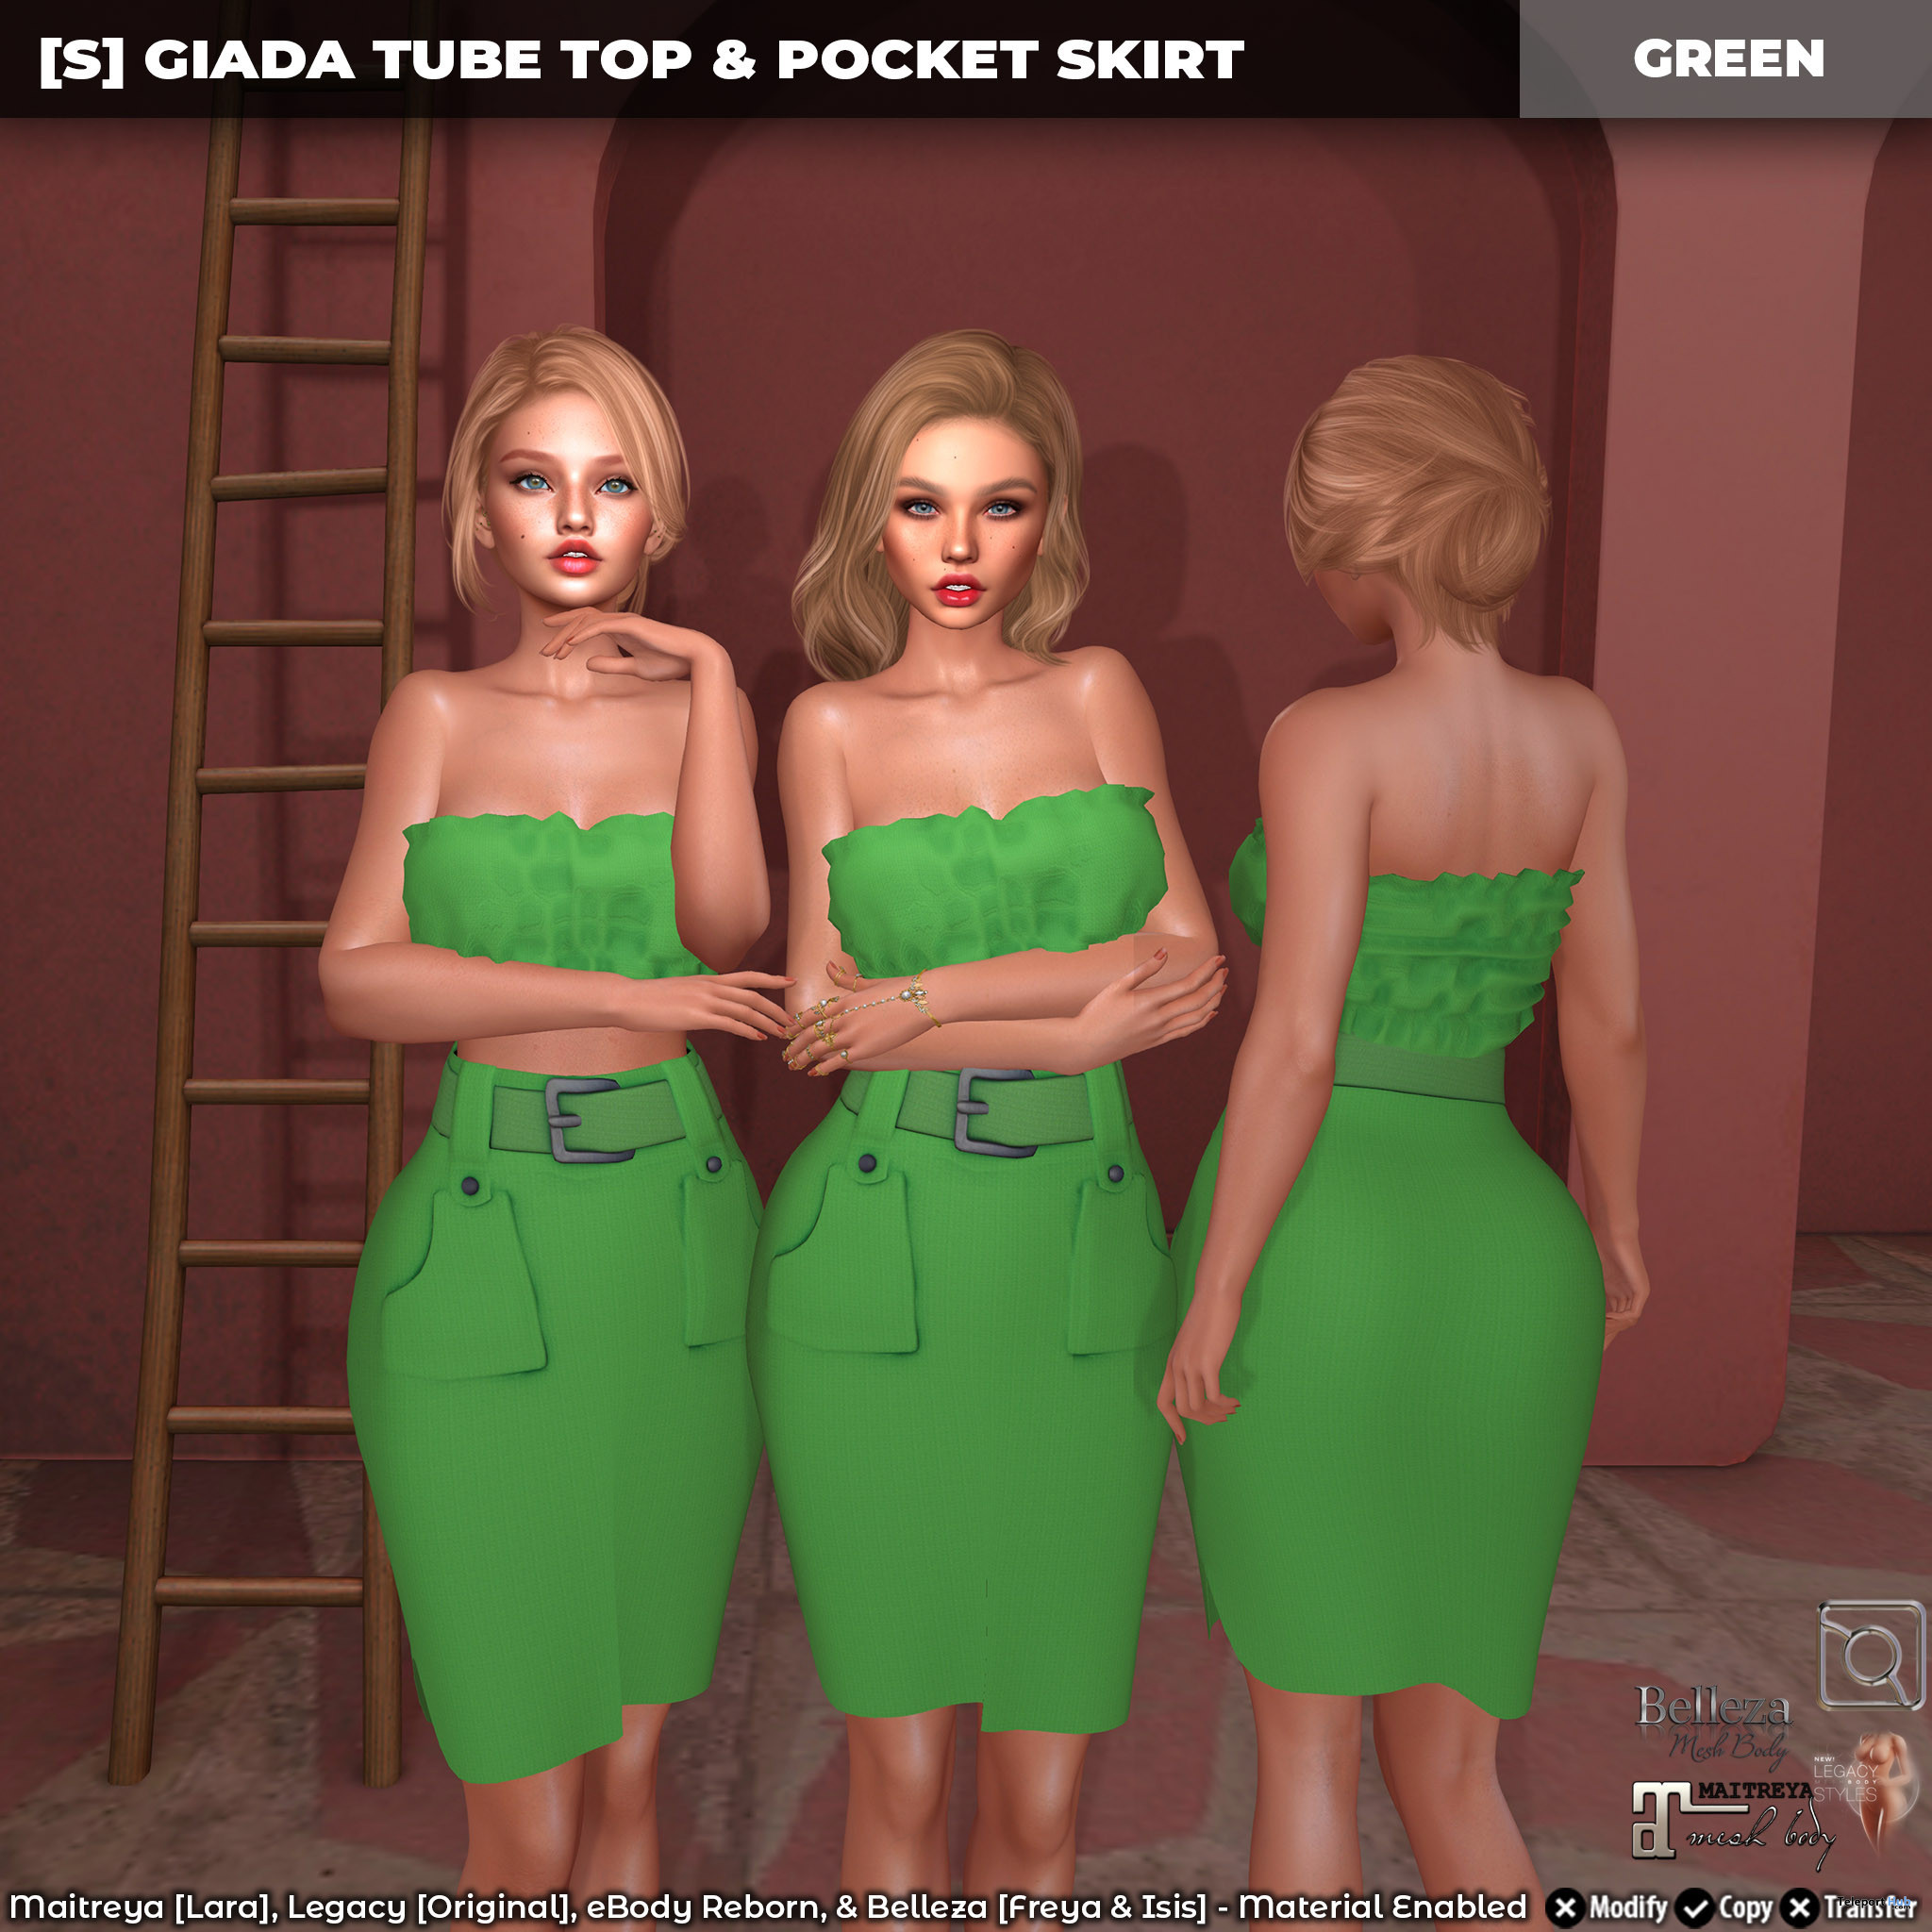 New Release: [S] Giada Tube Top & Pocket Skirt by [satus Inc] - Teleport Hub - teleporthub.com